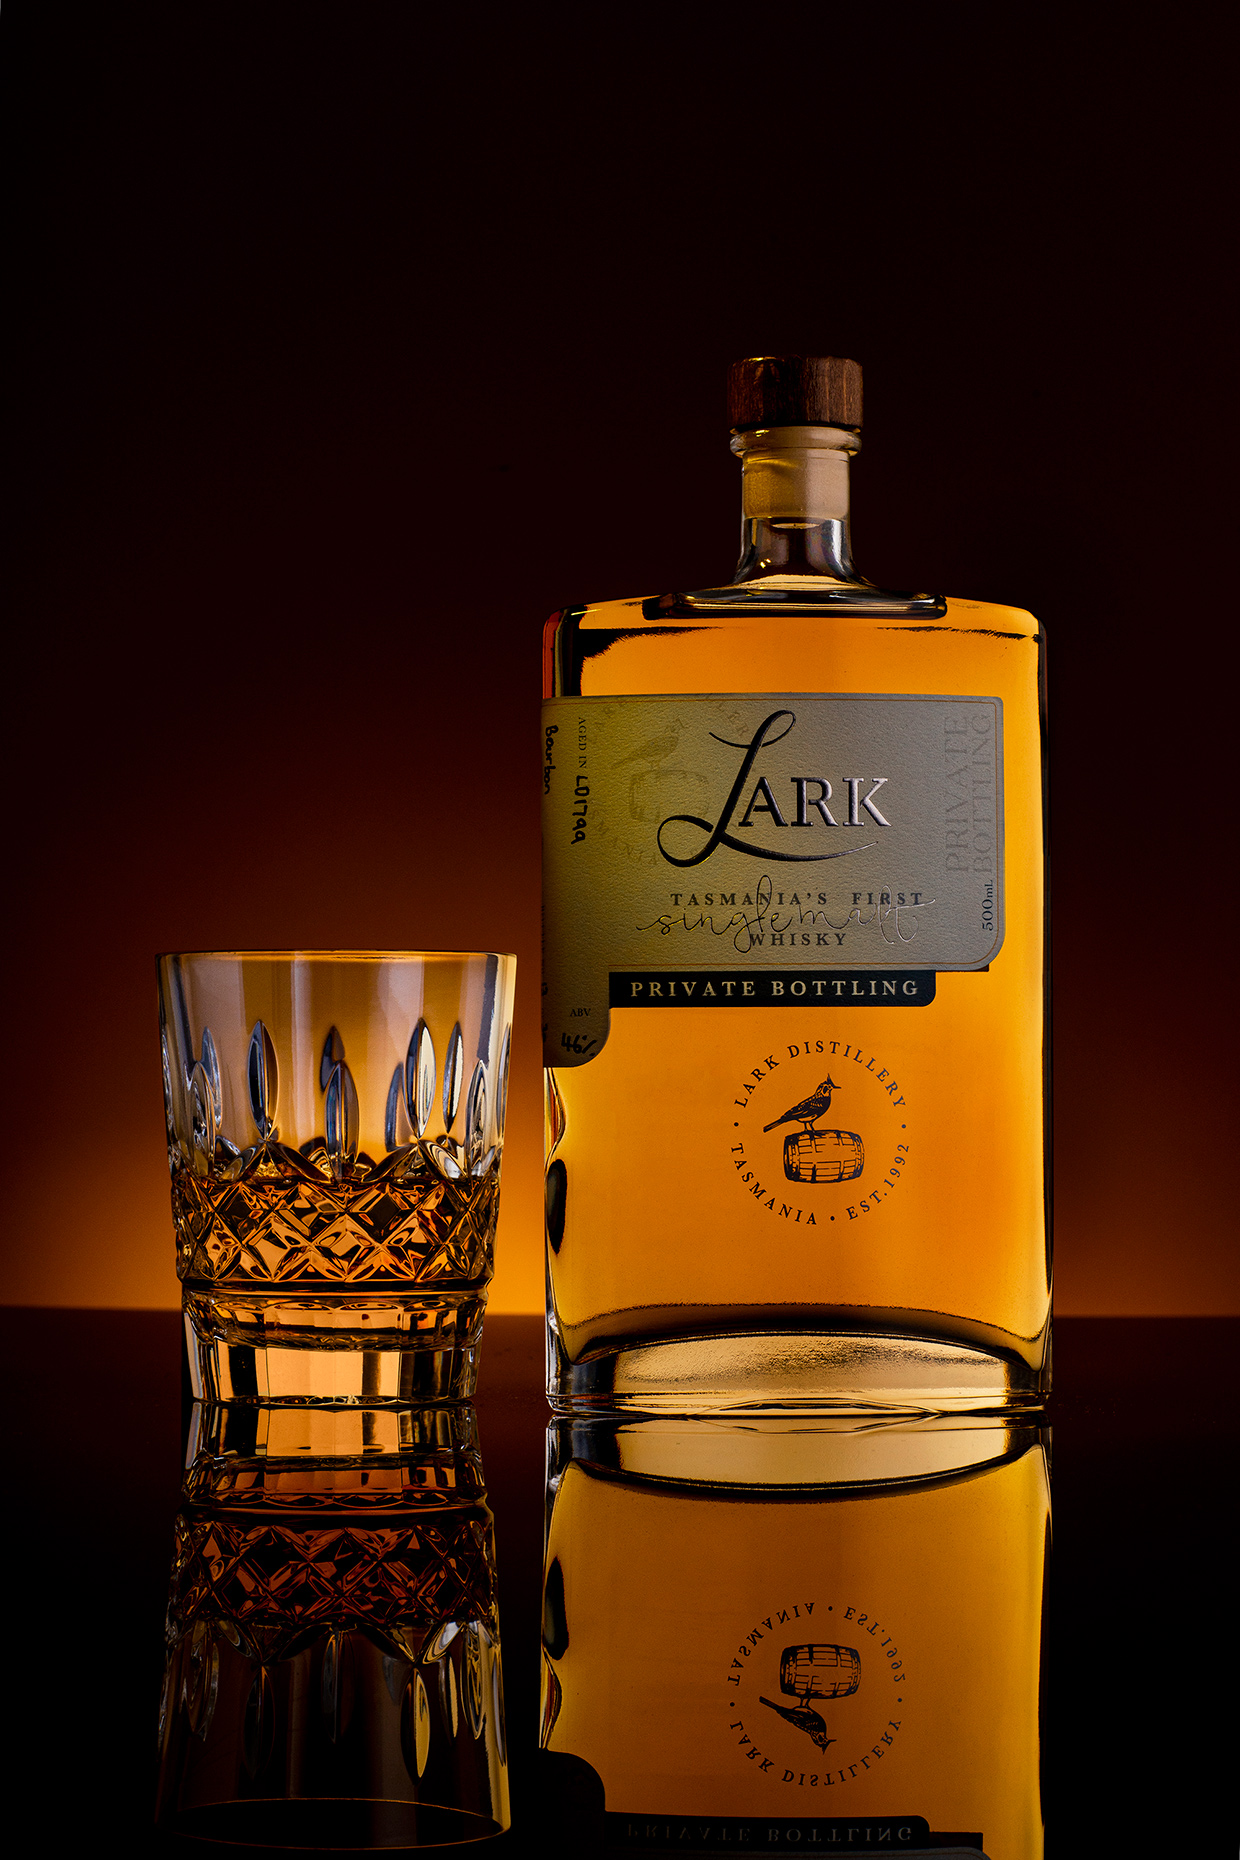 Lark whisky from Tasmania